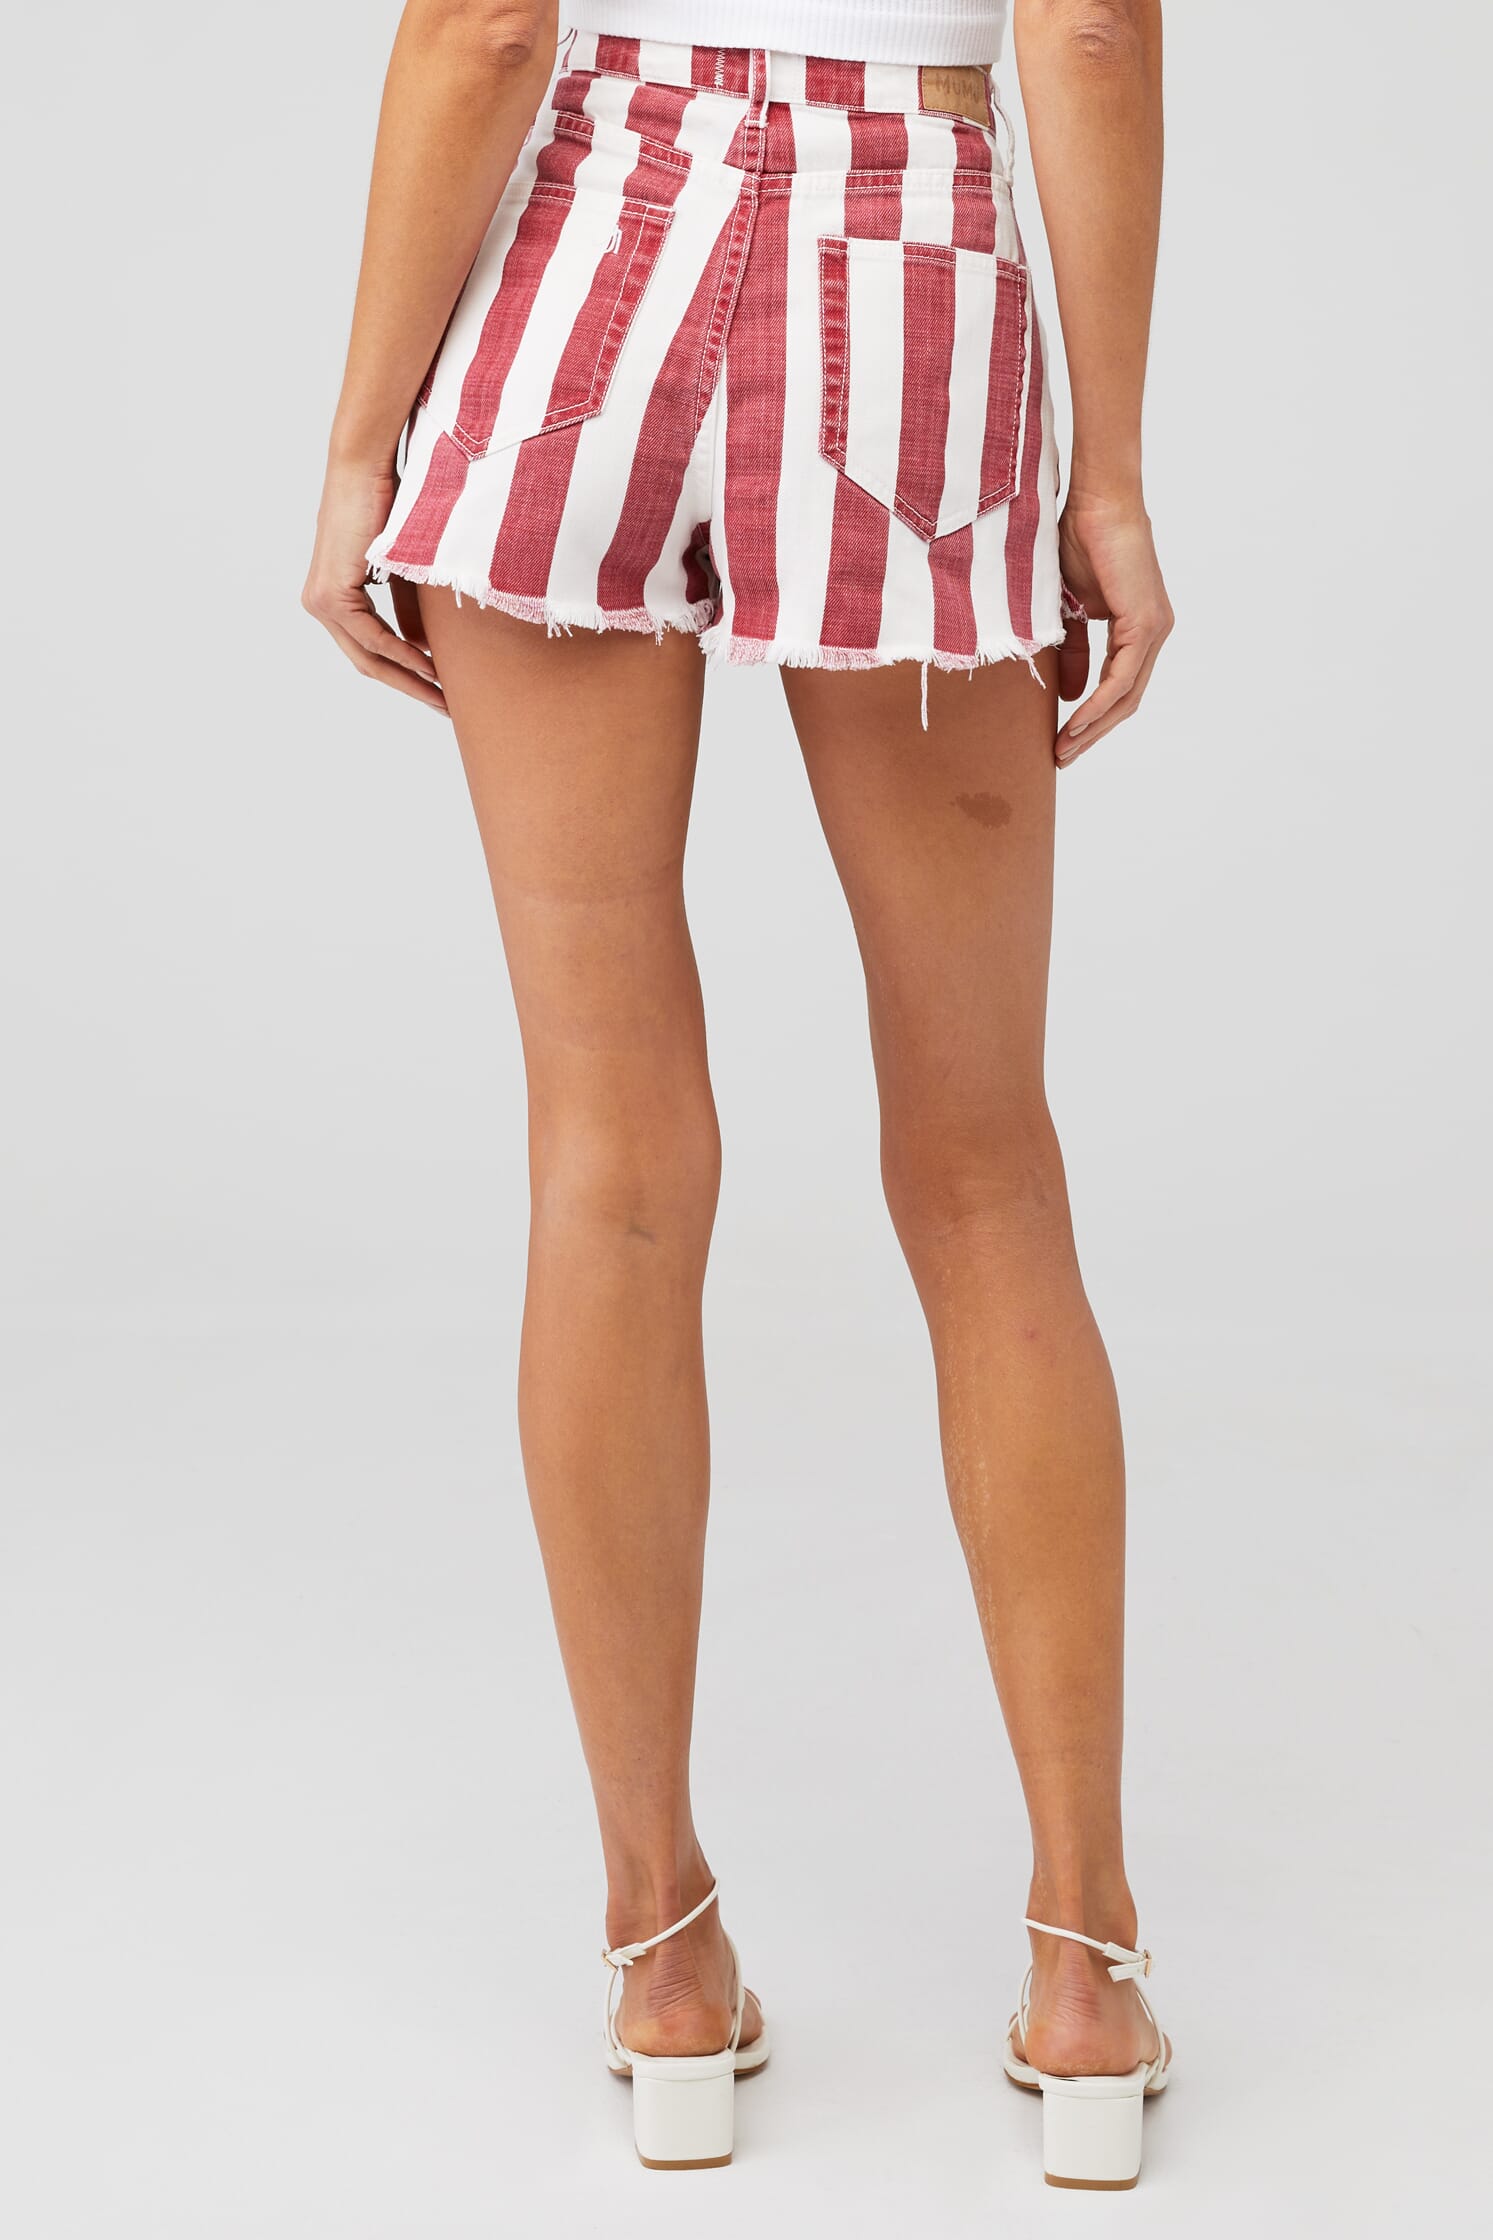 Show Me Your Mumu | Arizona High Waisted Shorts in Candy Stripe| FashionPass